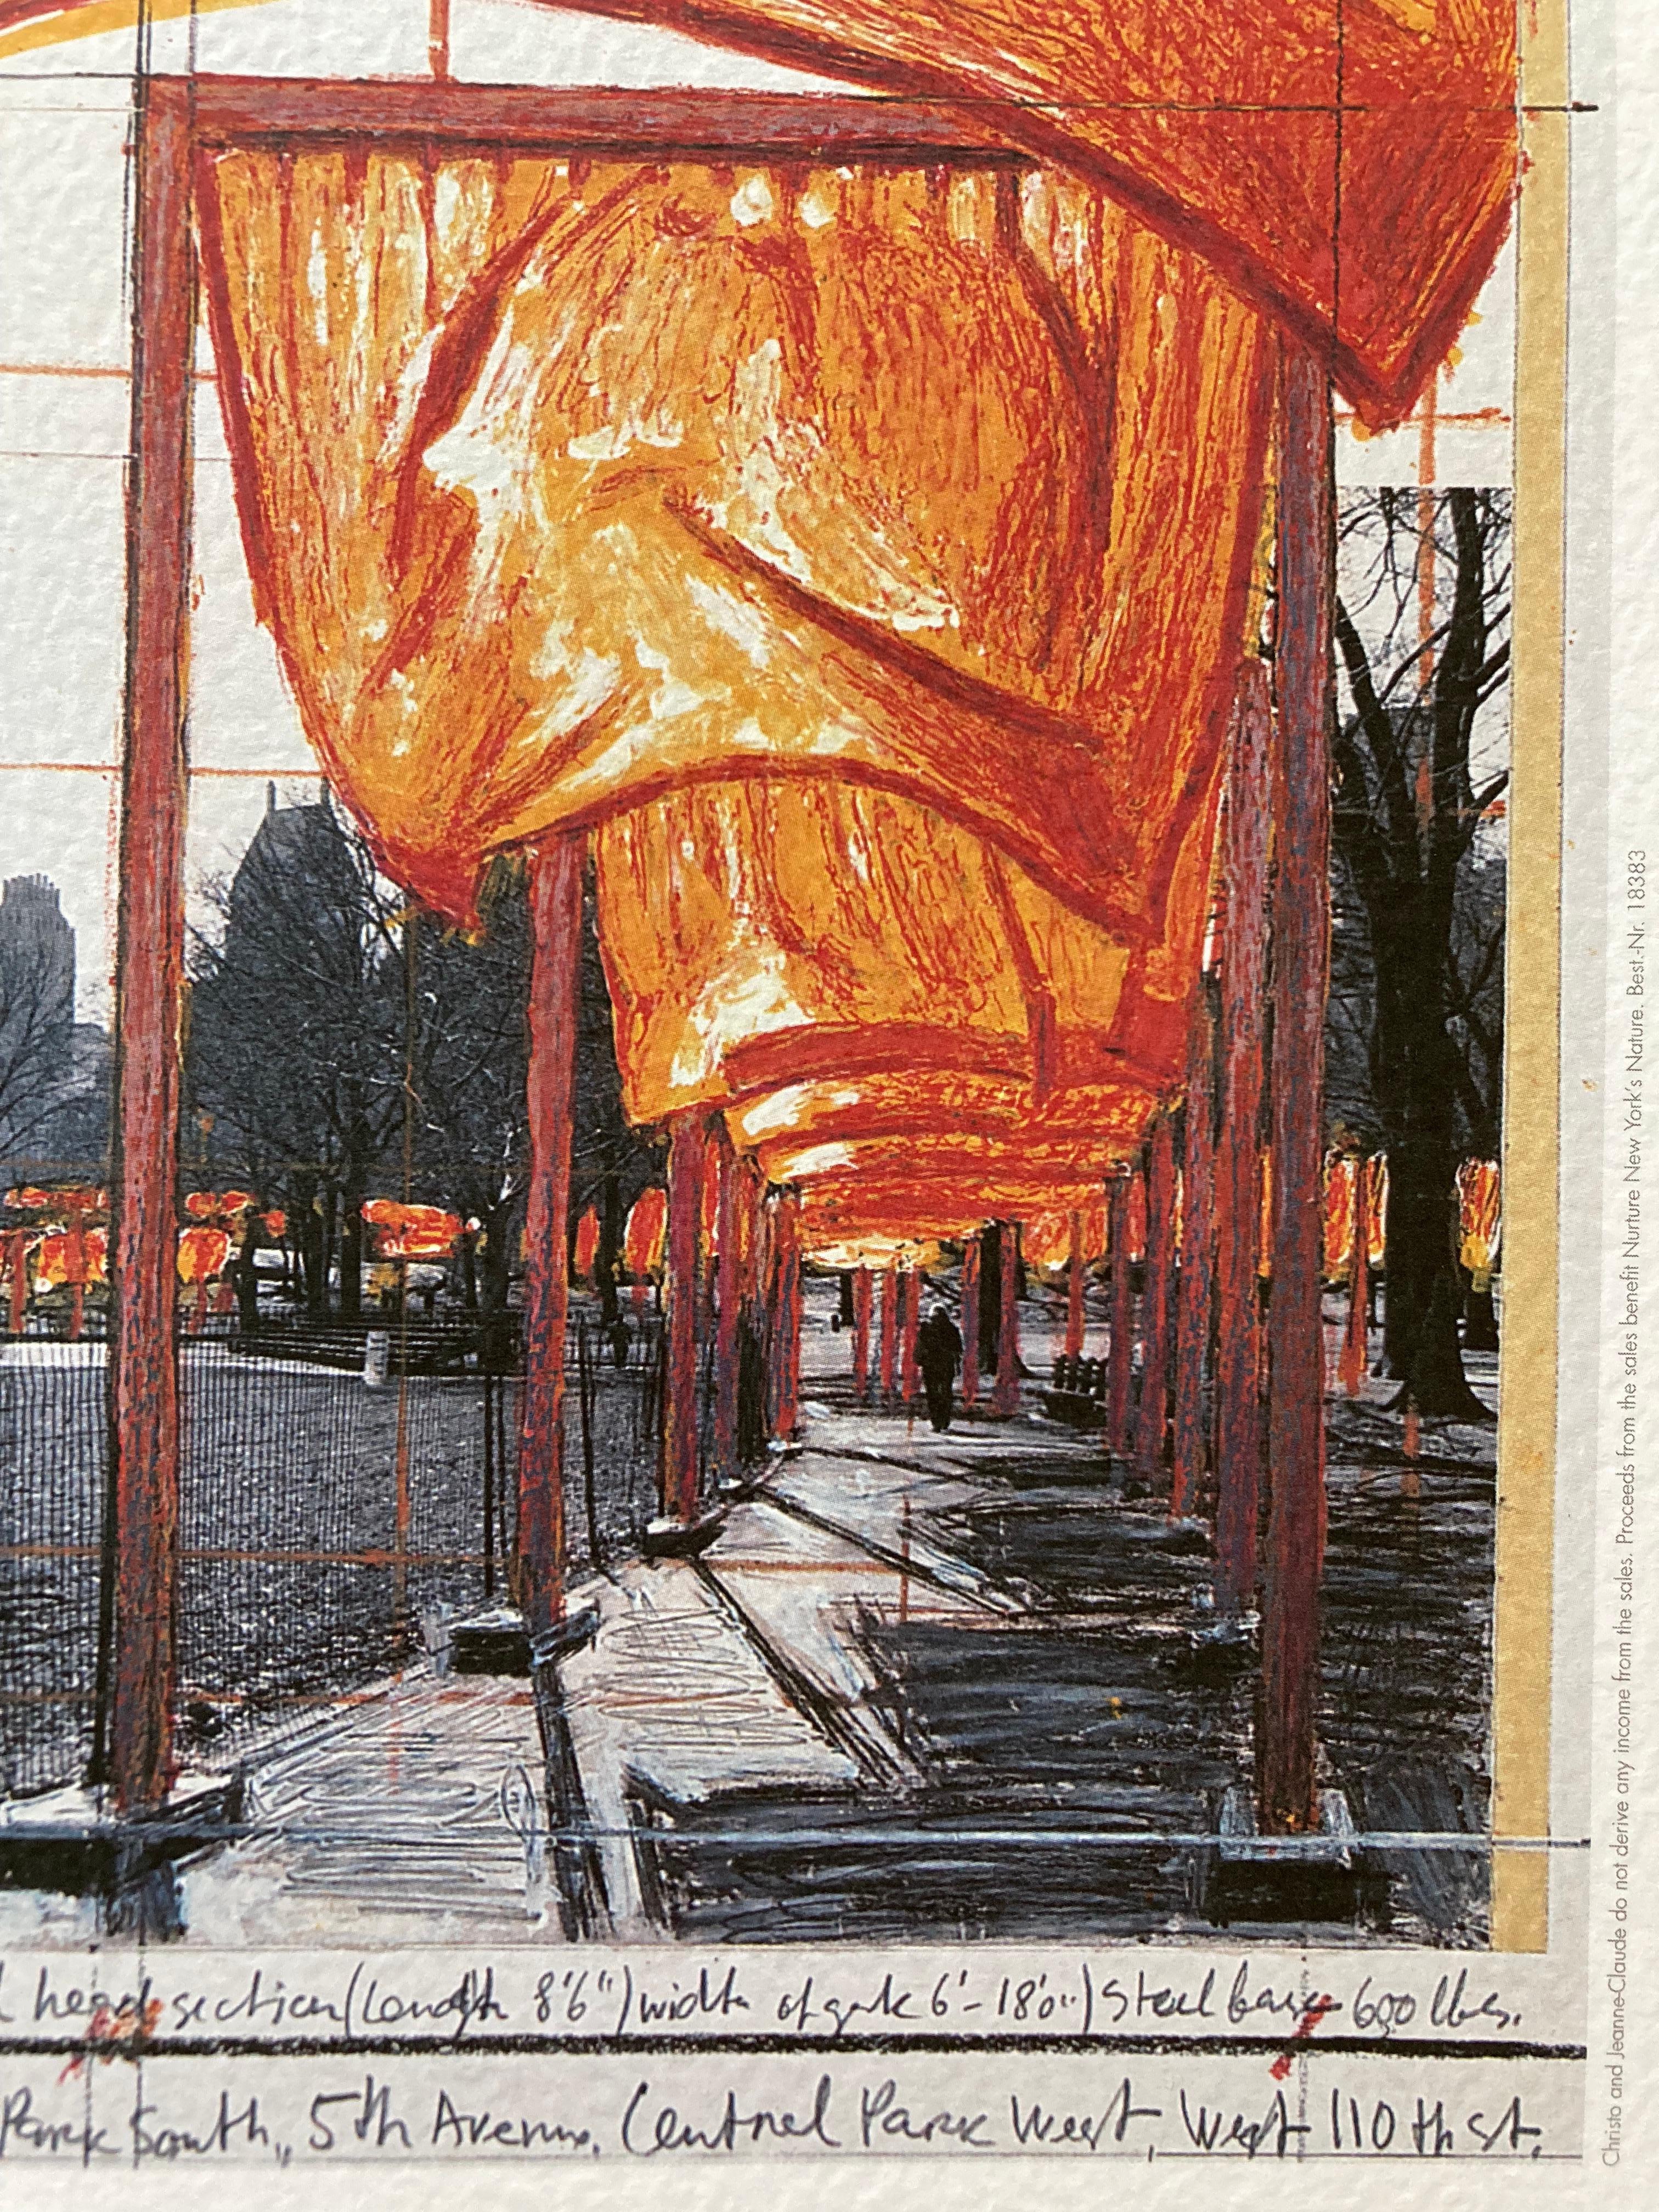 Christo 'The Gates' NYC Signed Print, 2005 1